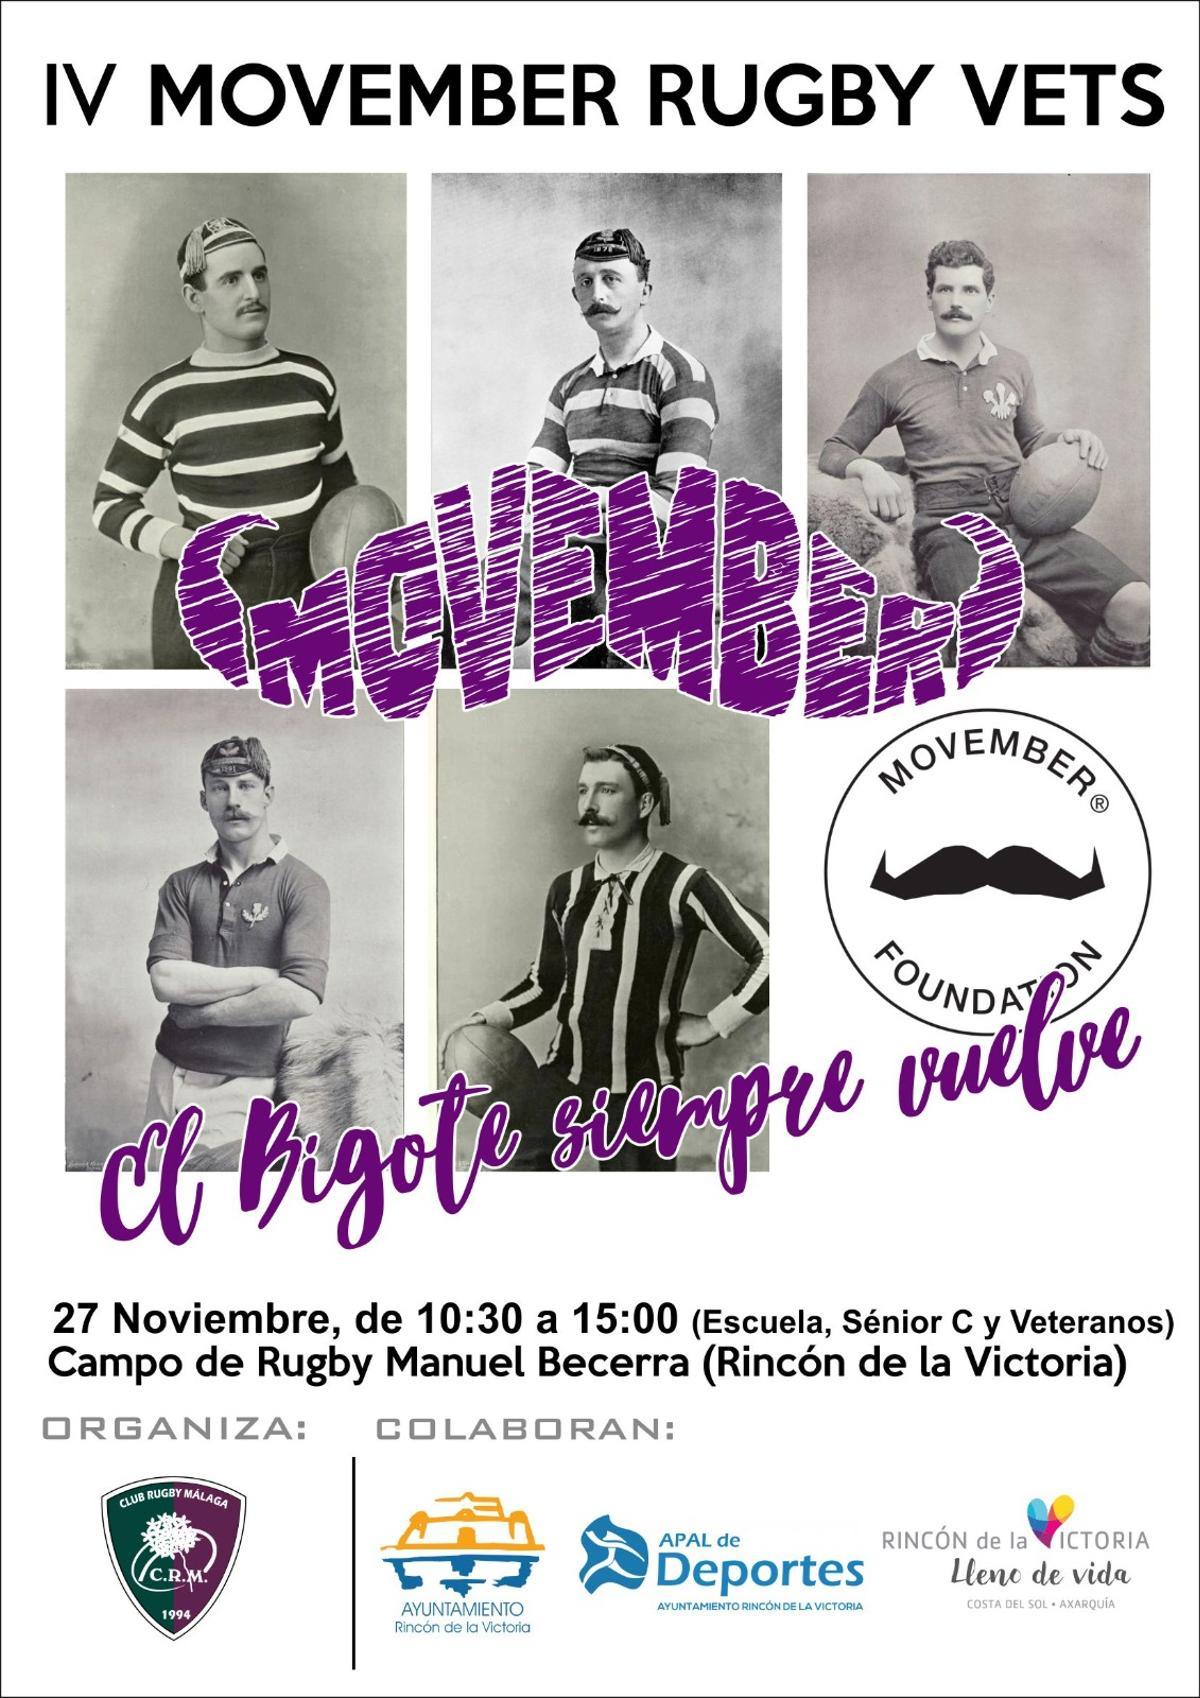 Cartel promocional del IV Movember Rugby Vets.